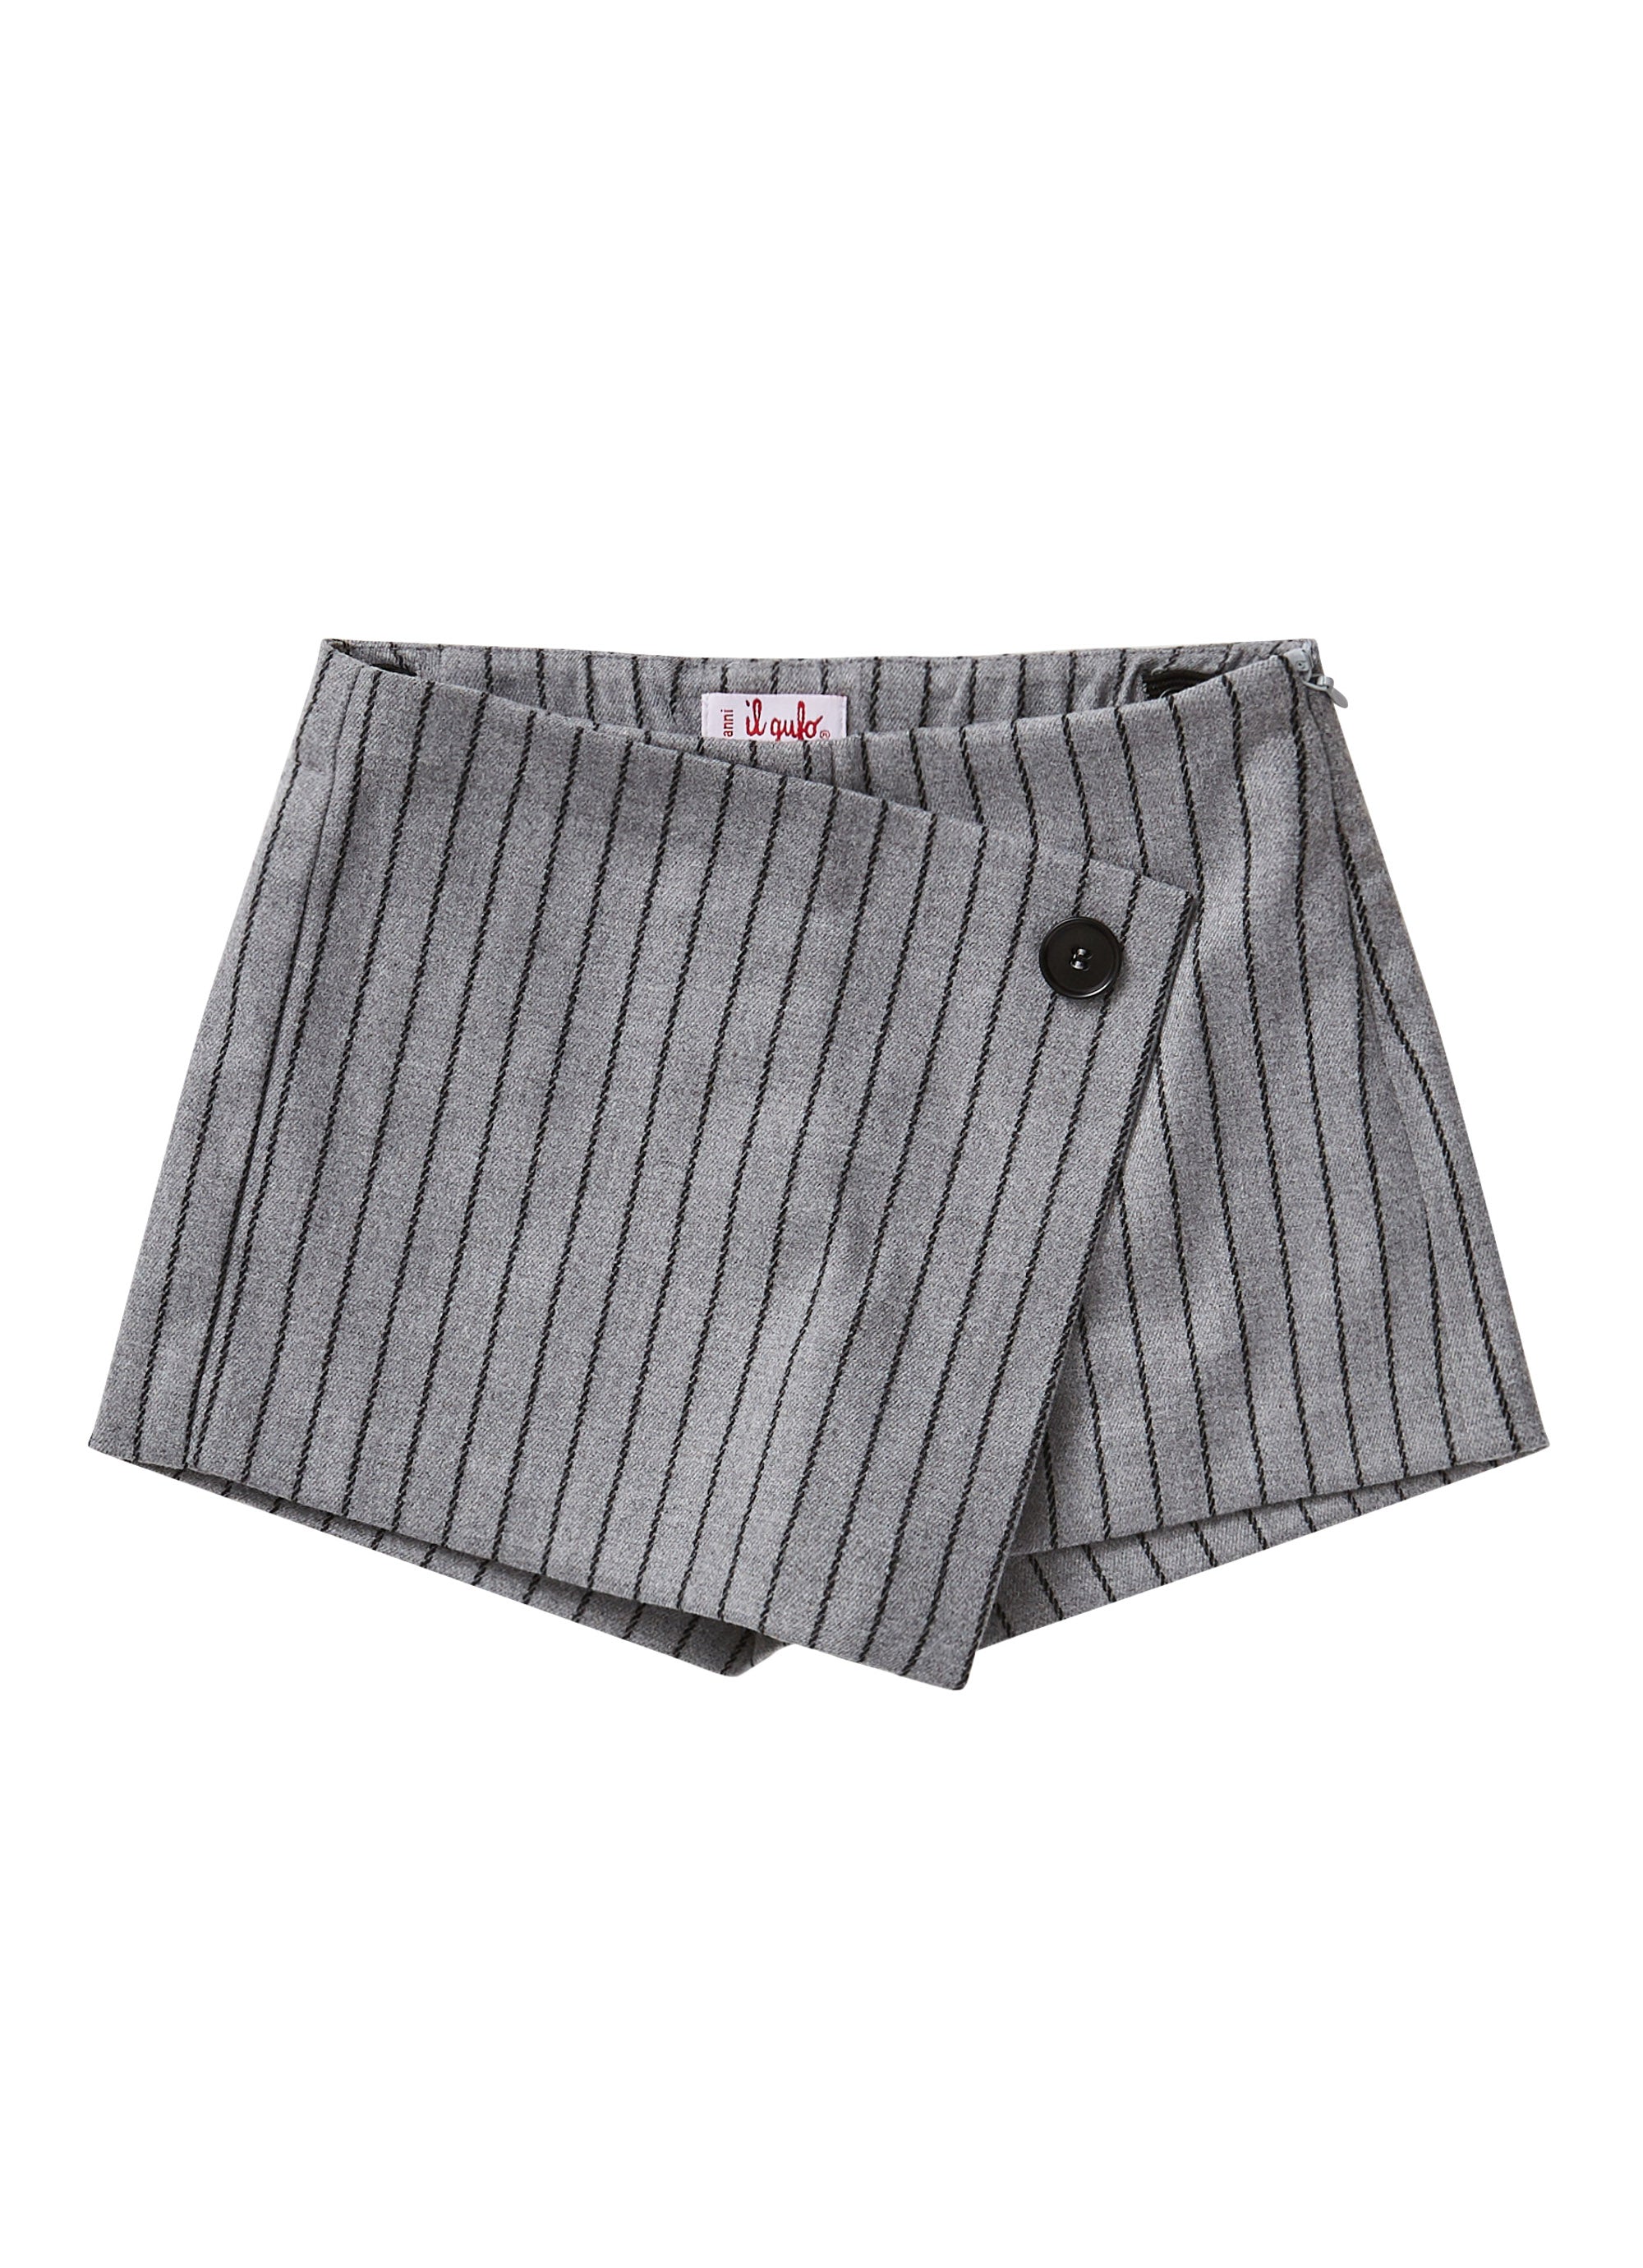 Girls Grey & Black Striped Shorts